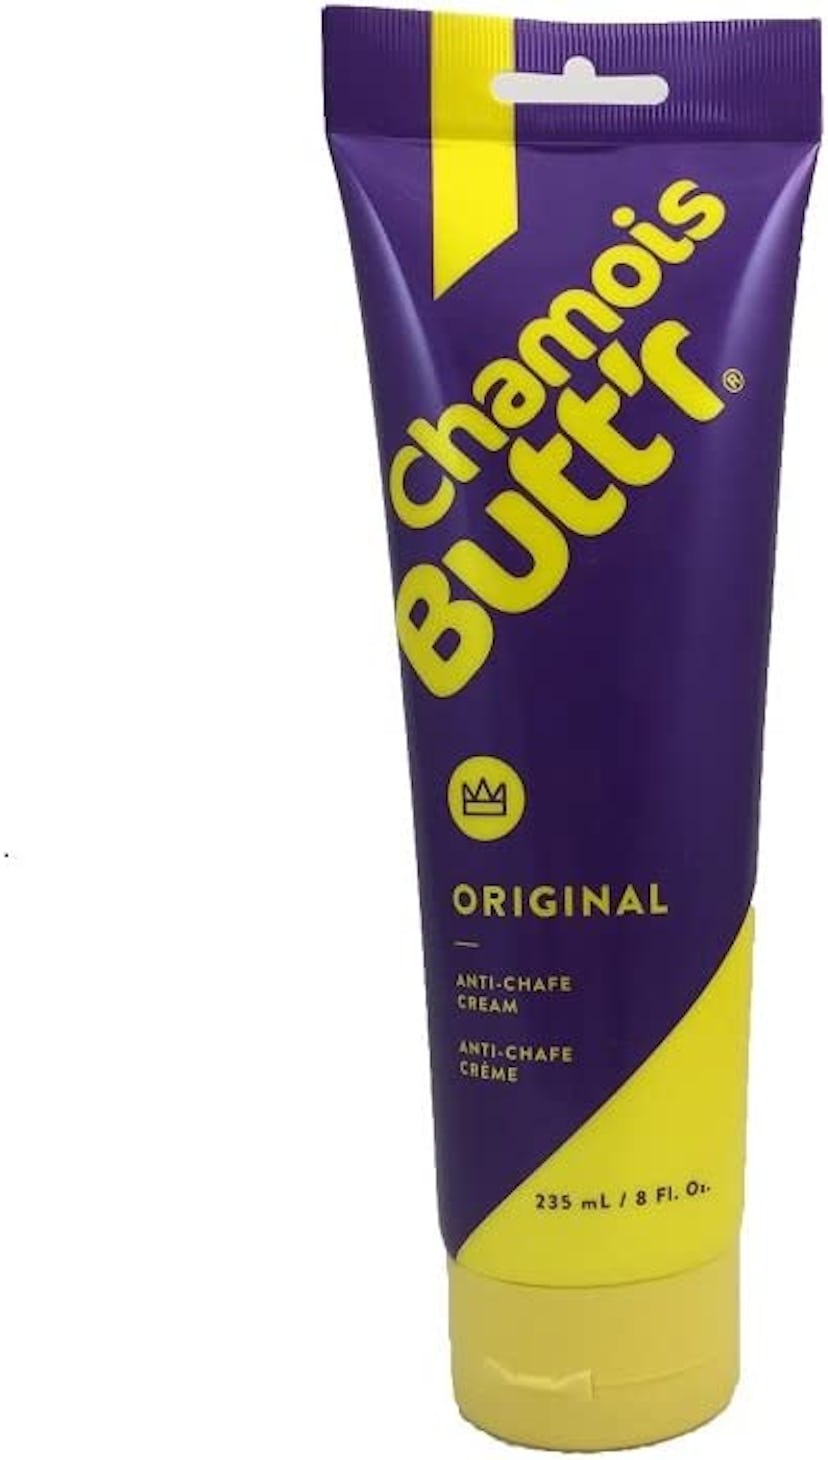 Chamois Butt'r Original Anti-Chafe Cream prevents chafing